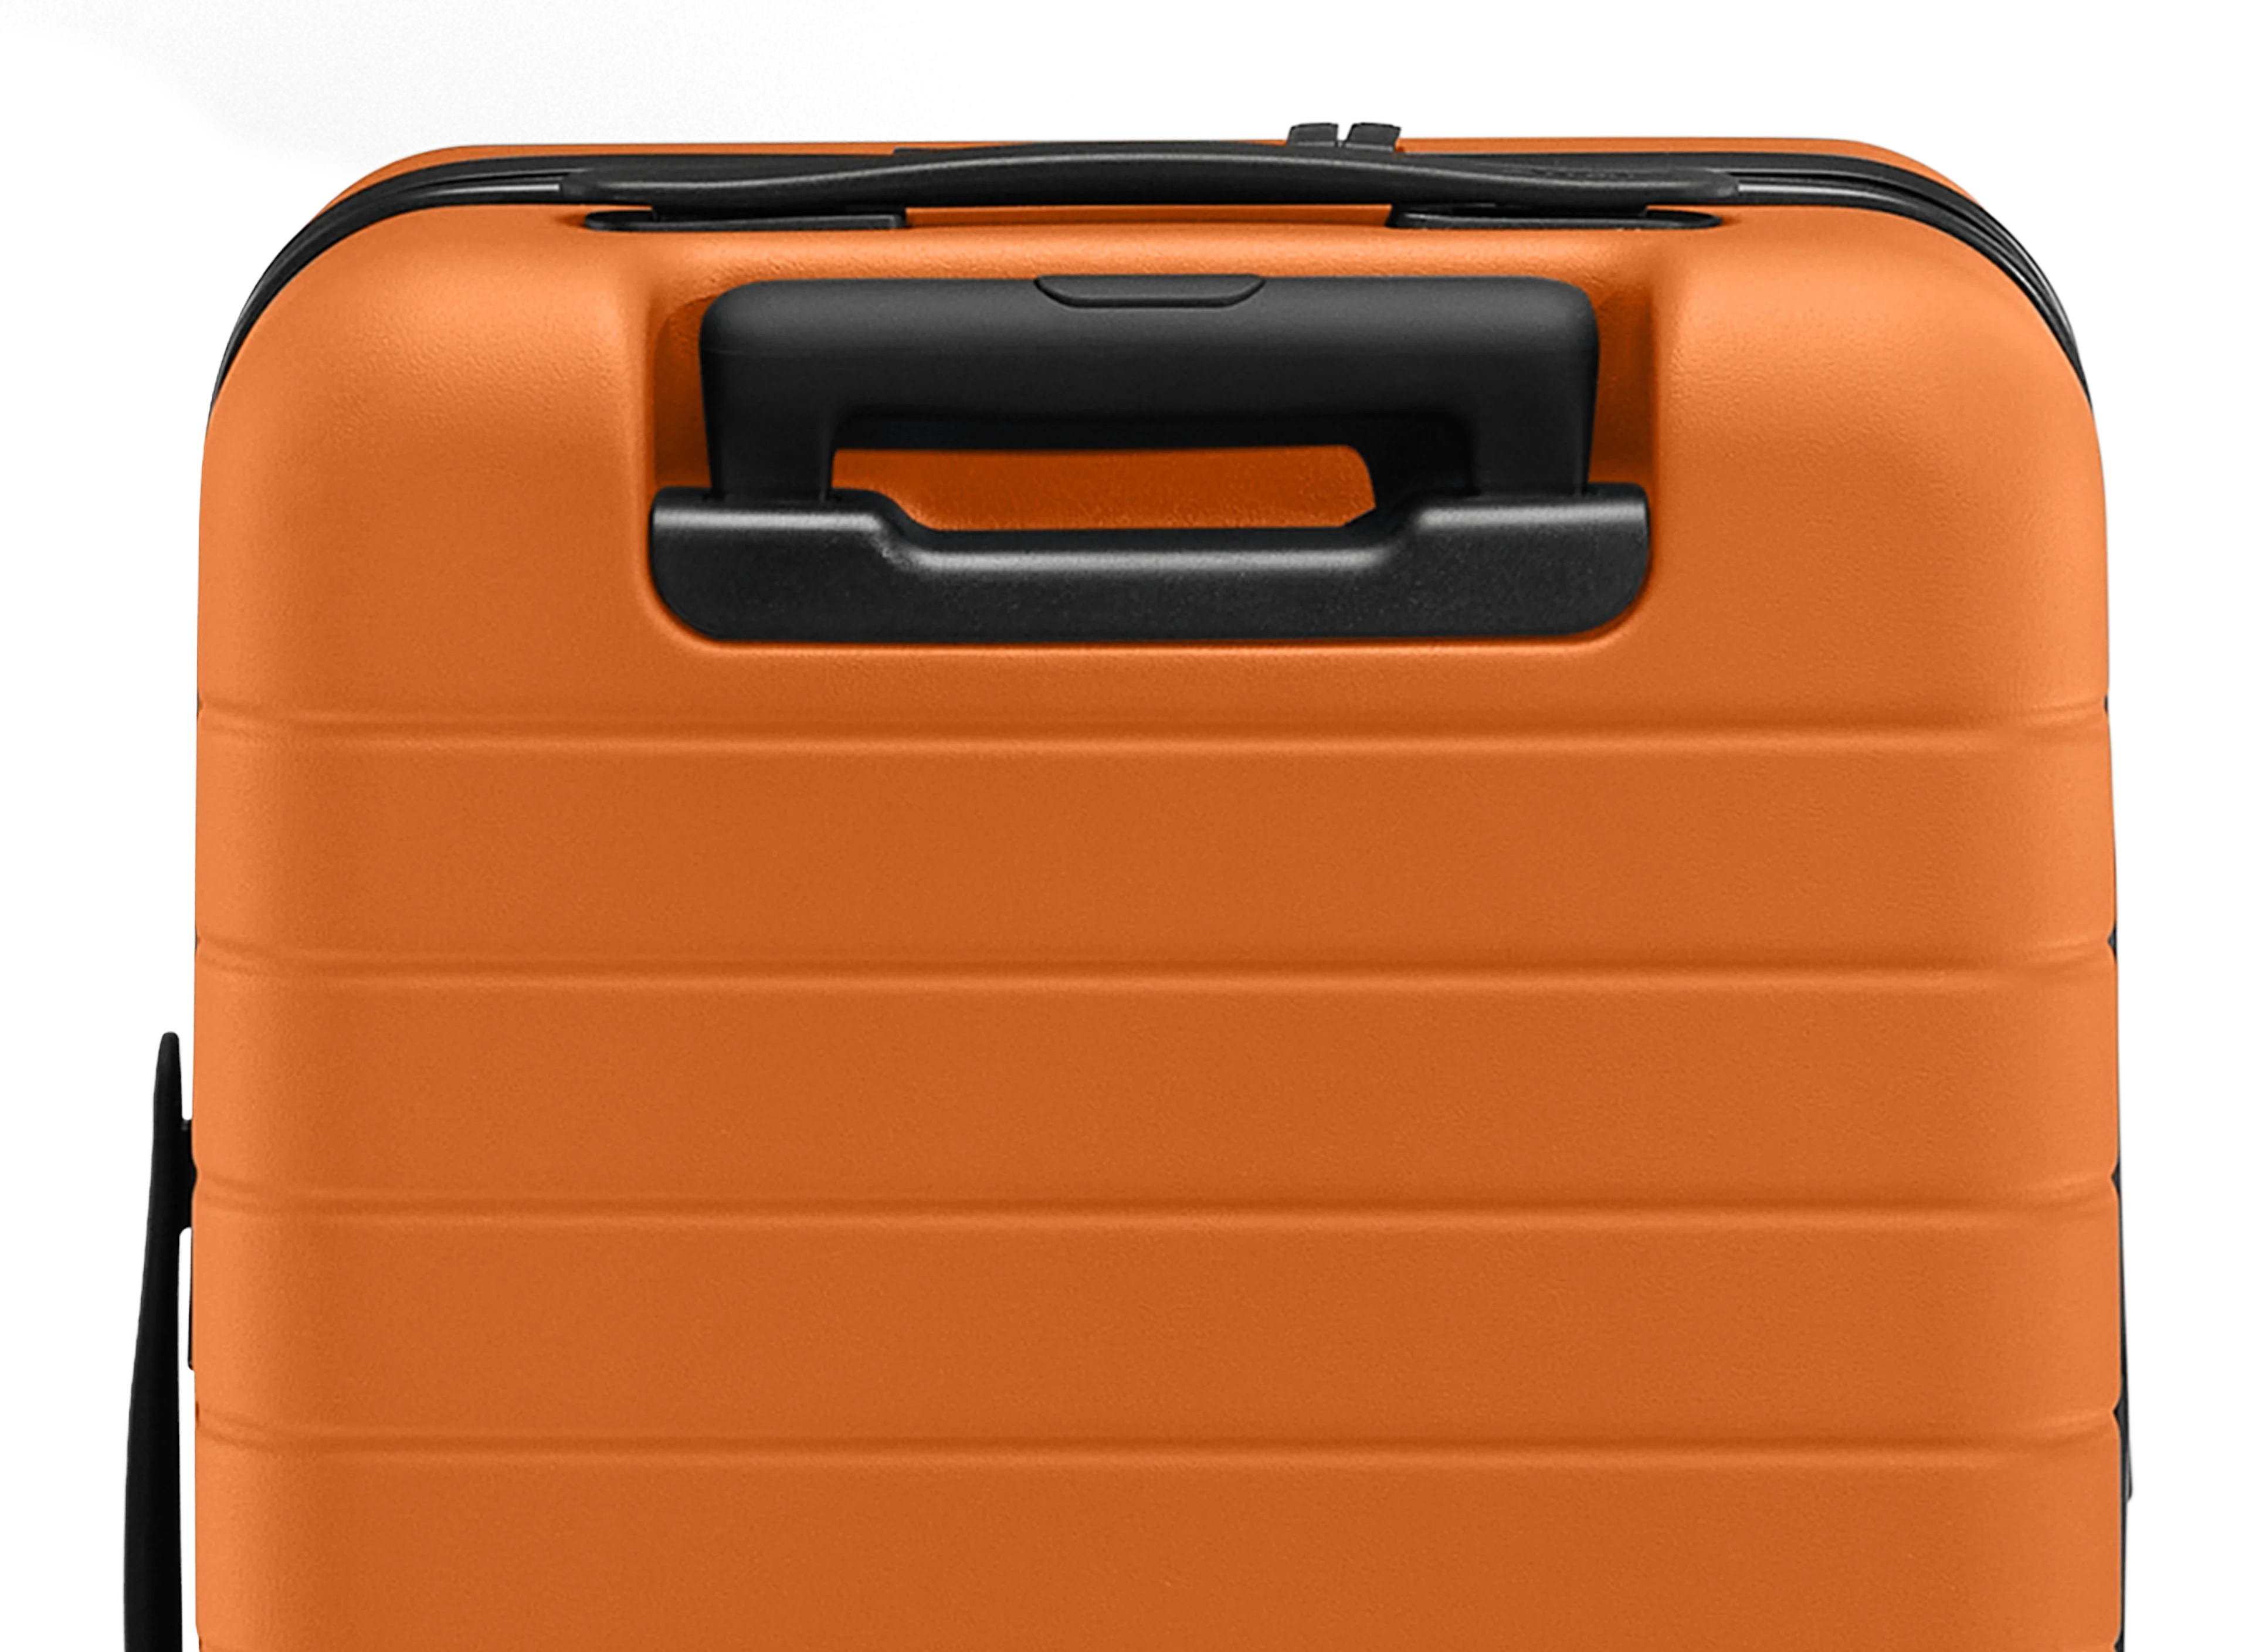 The Carry-On Flex in Sorbet Orange